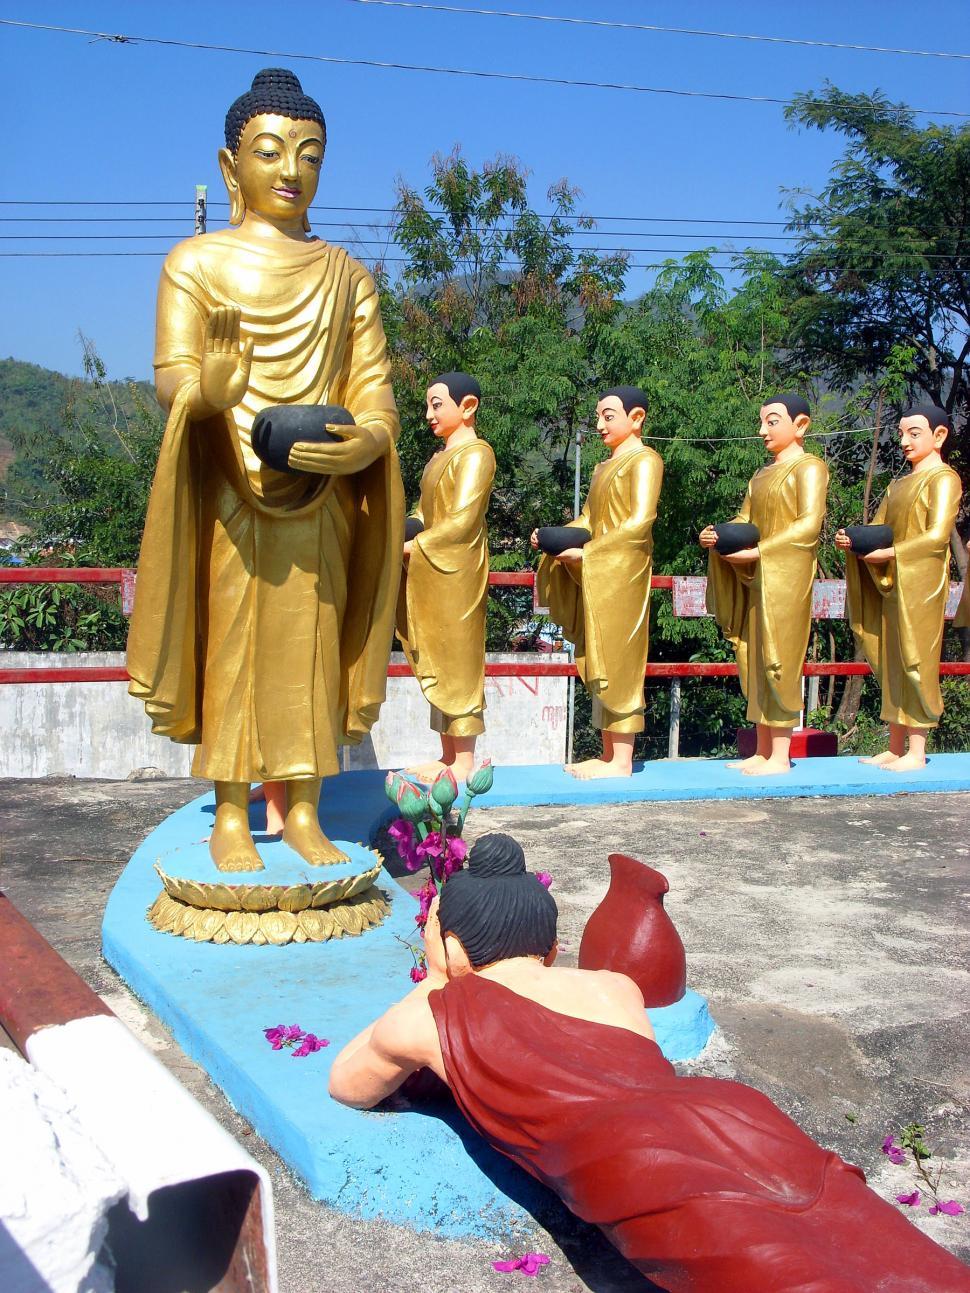 Free Image of Statues of Buddha 